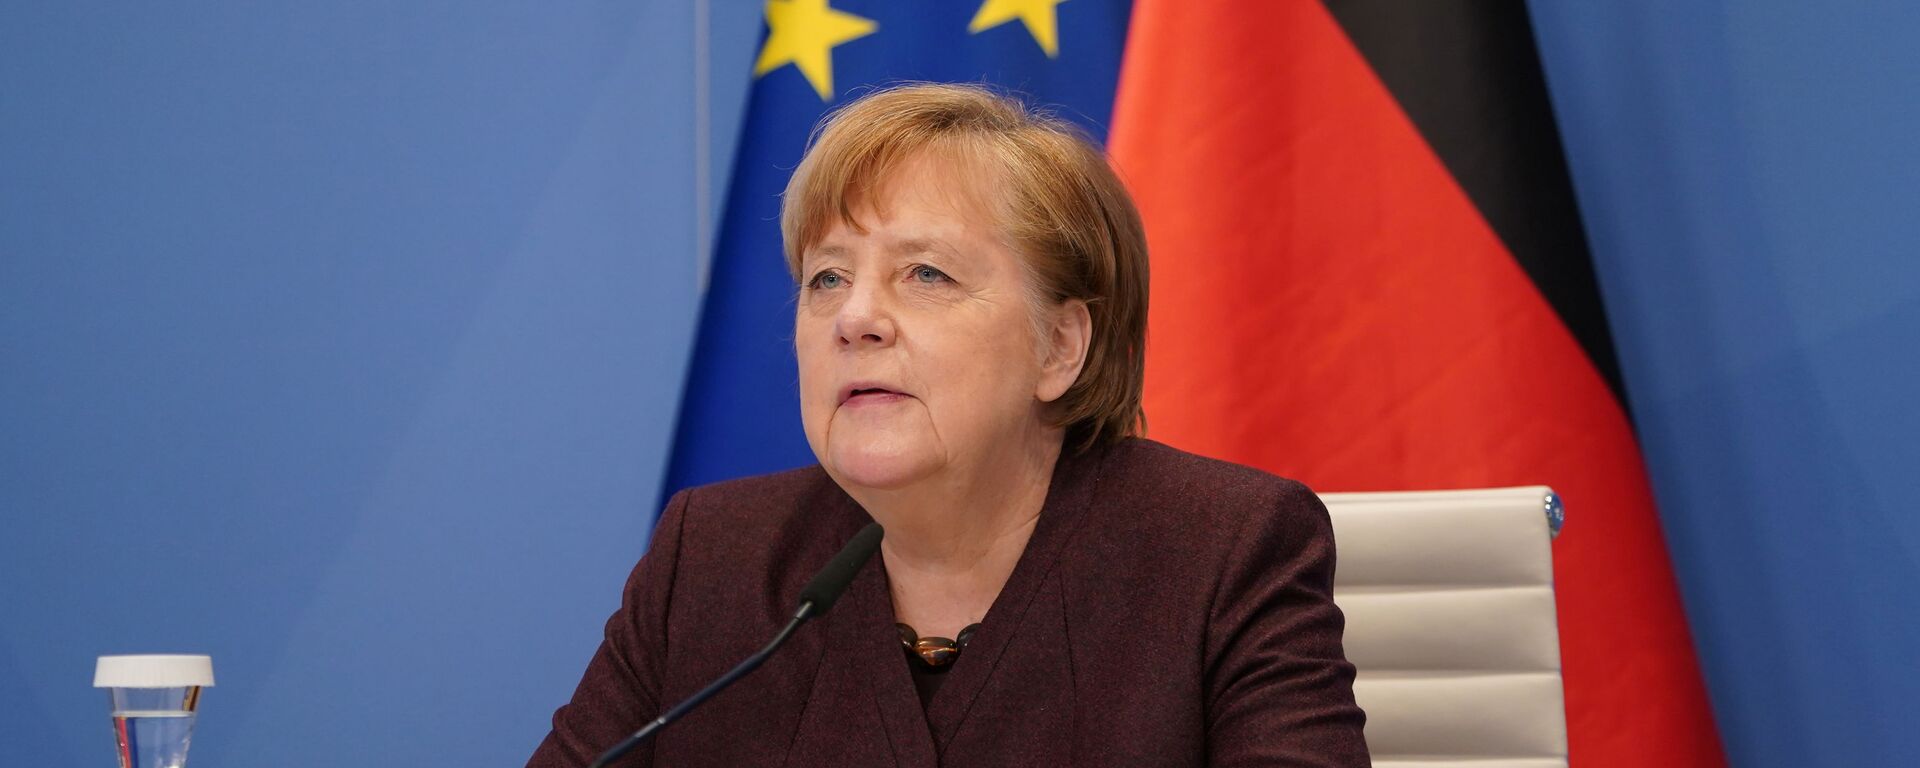 Angela Merkel, canciller alemana - Sputnik Mundo, 1920, 24.06.2021